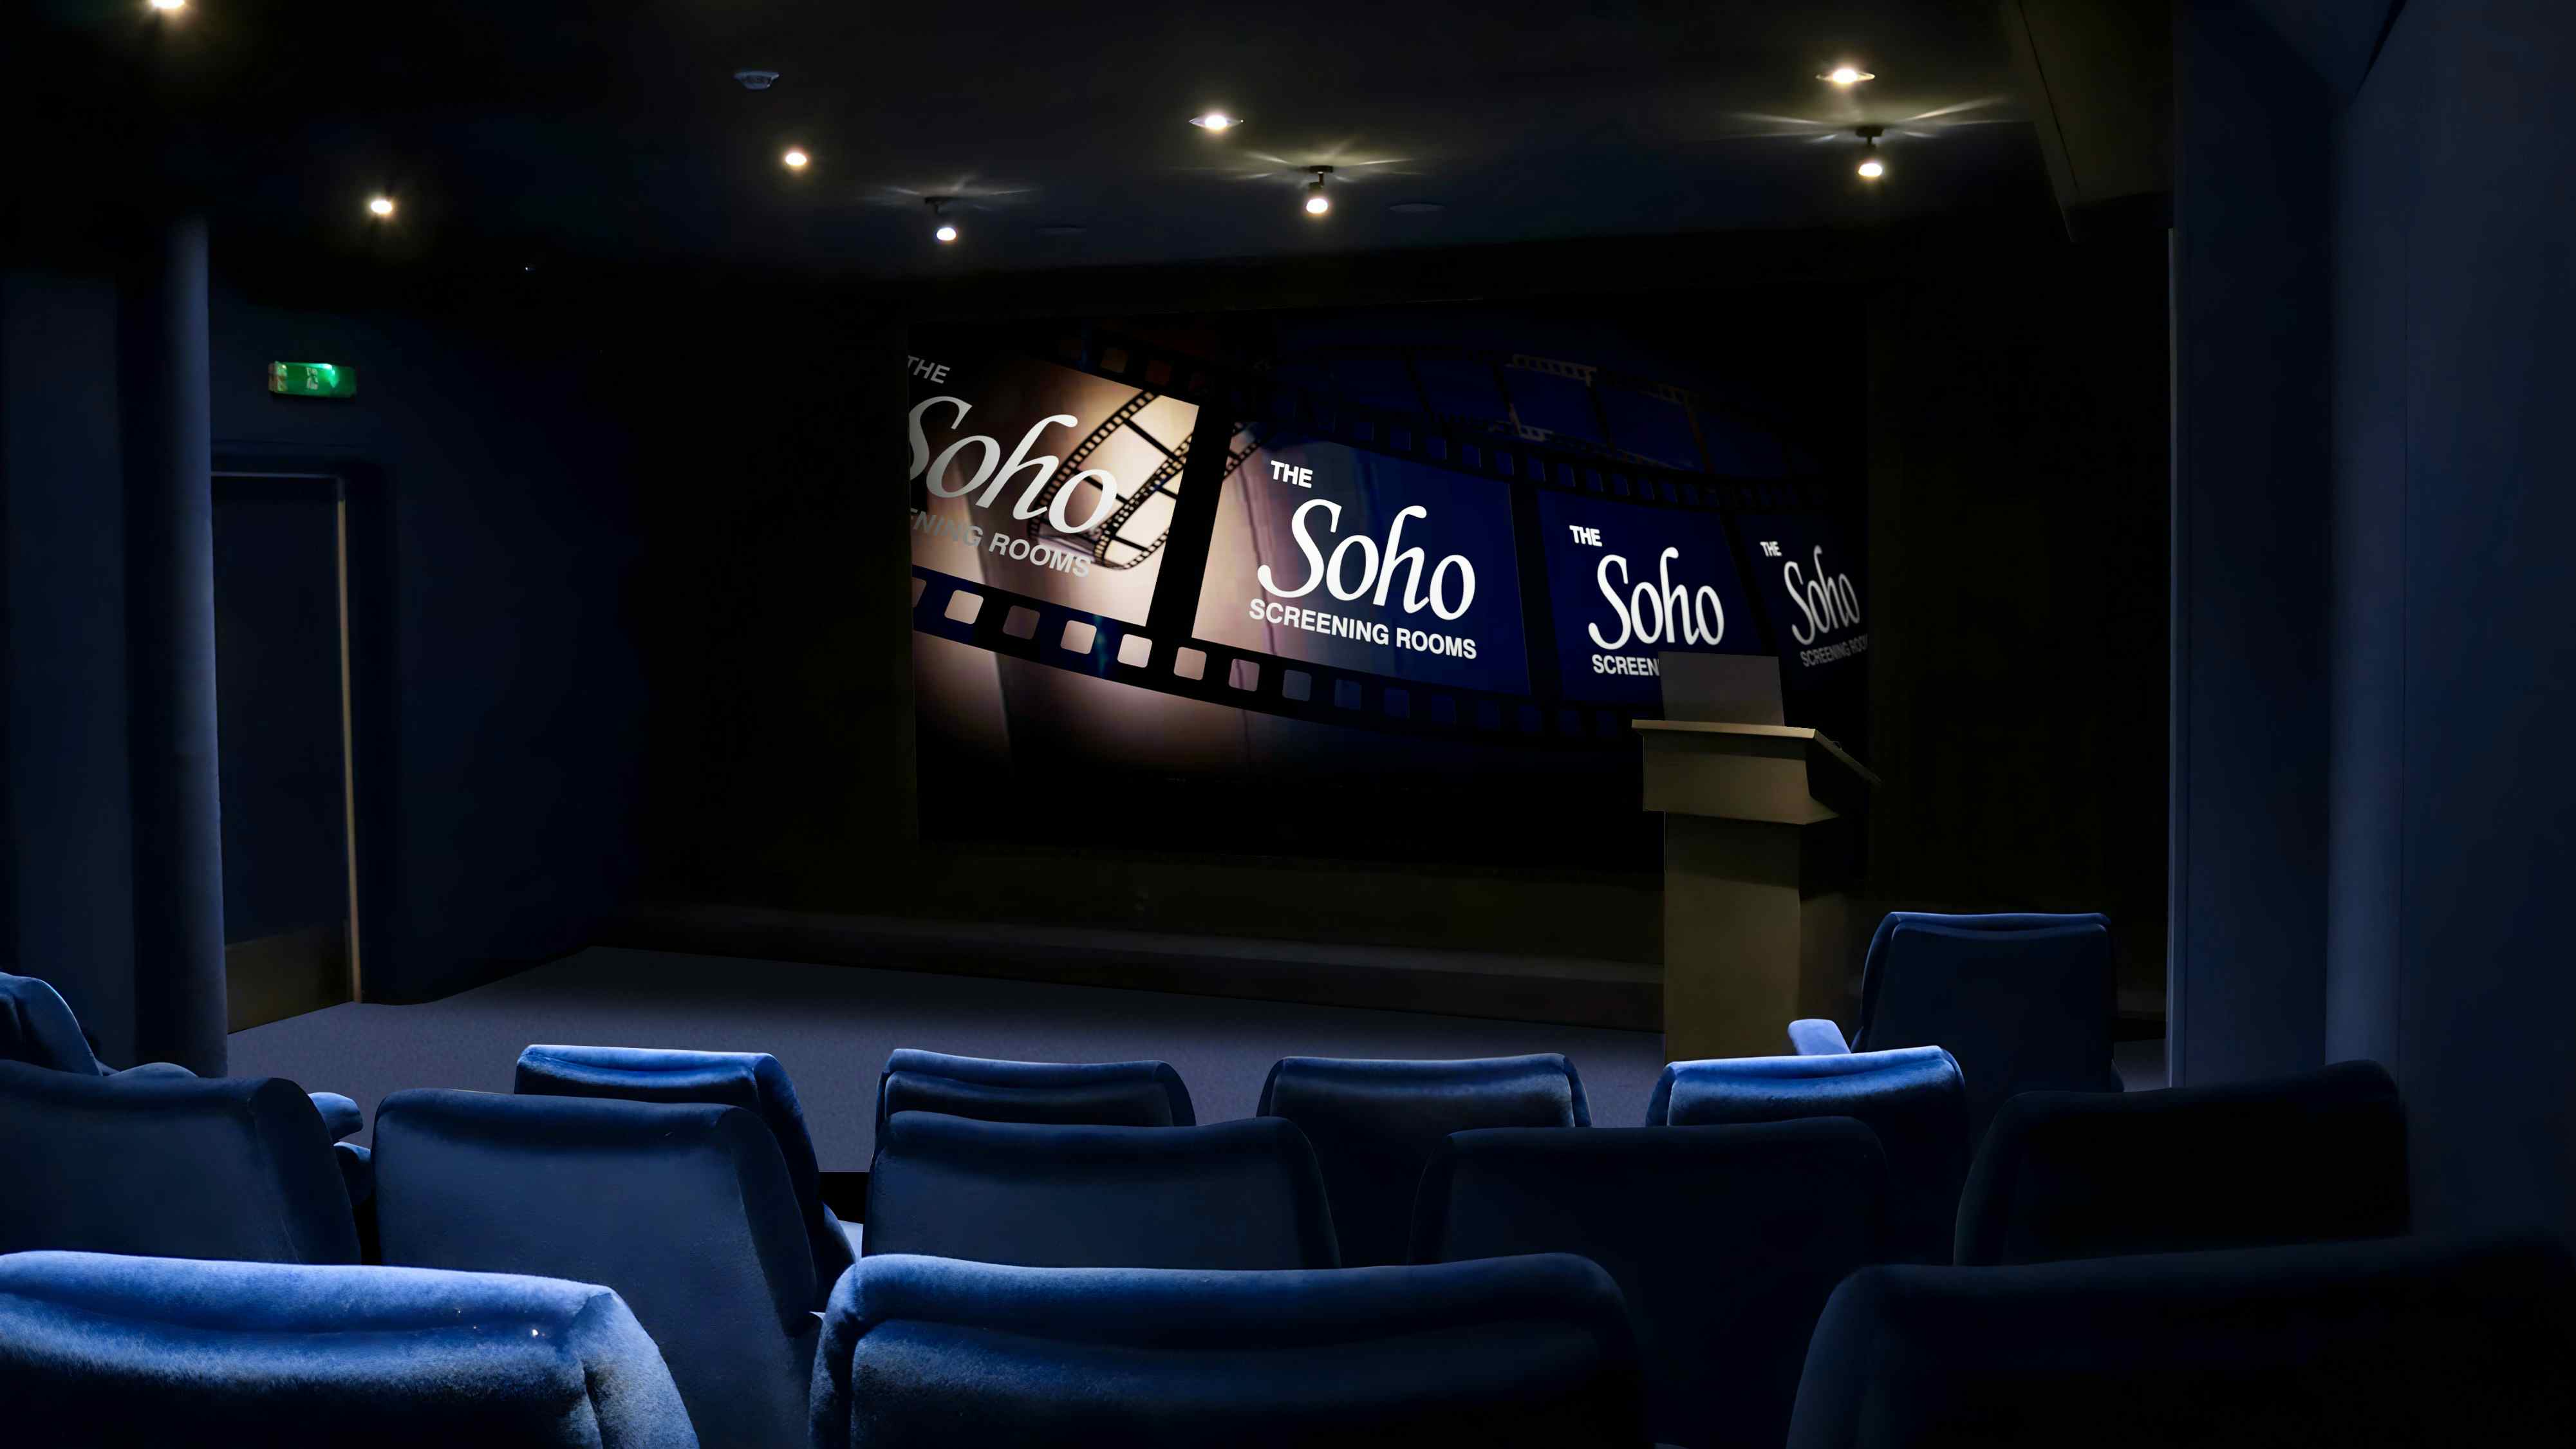 Presentations at The Soho Screening Rooms, The Soho Screening Rooms